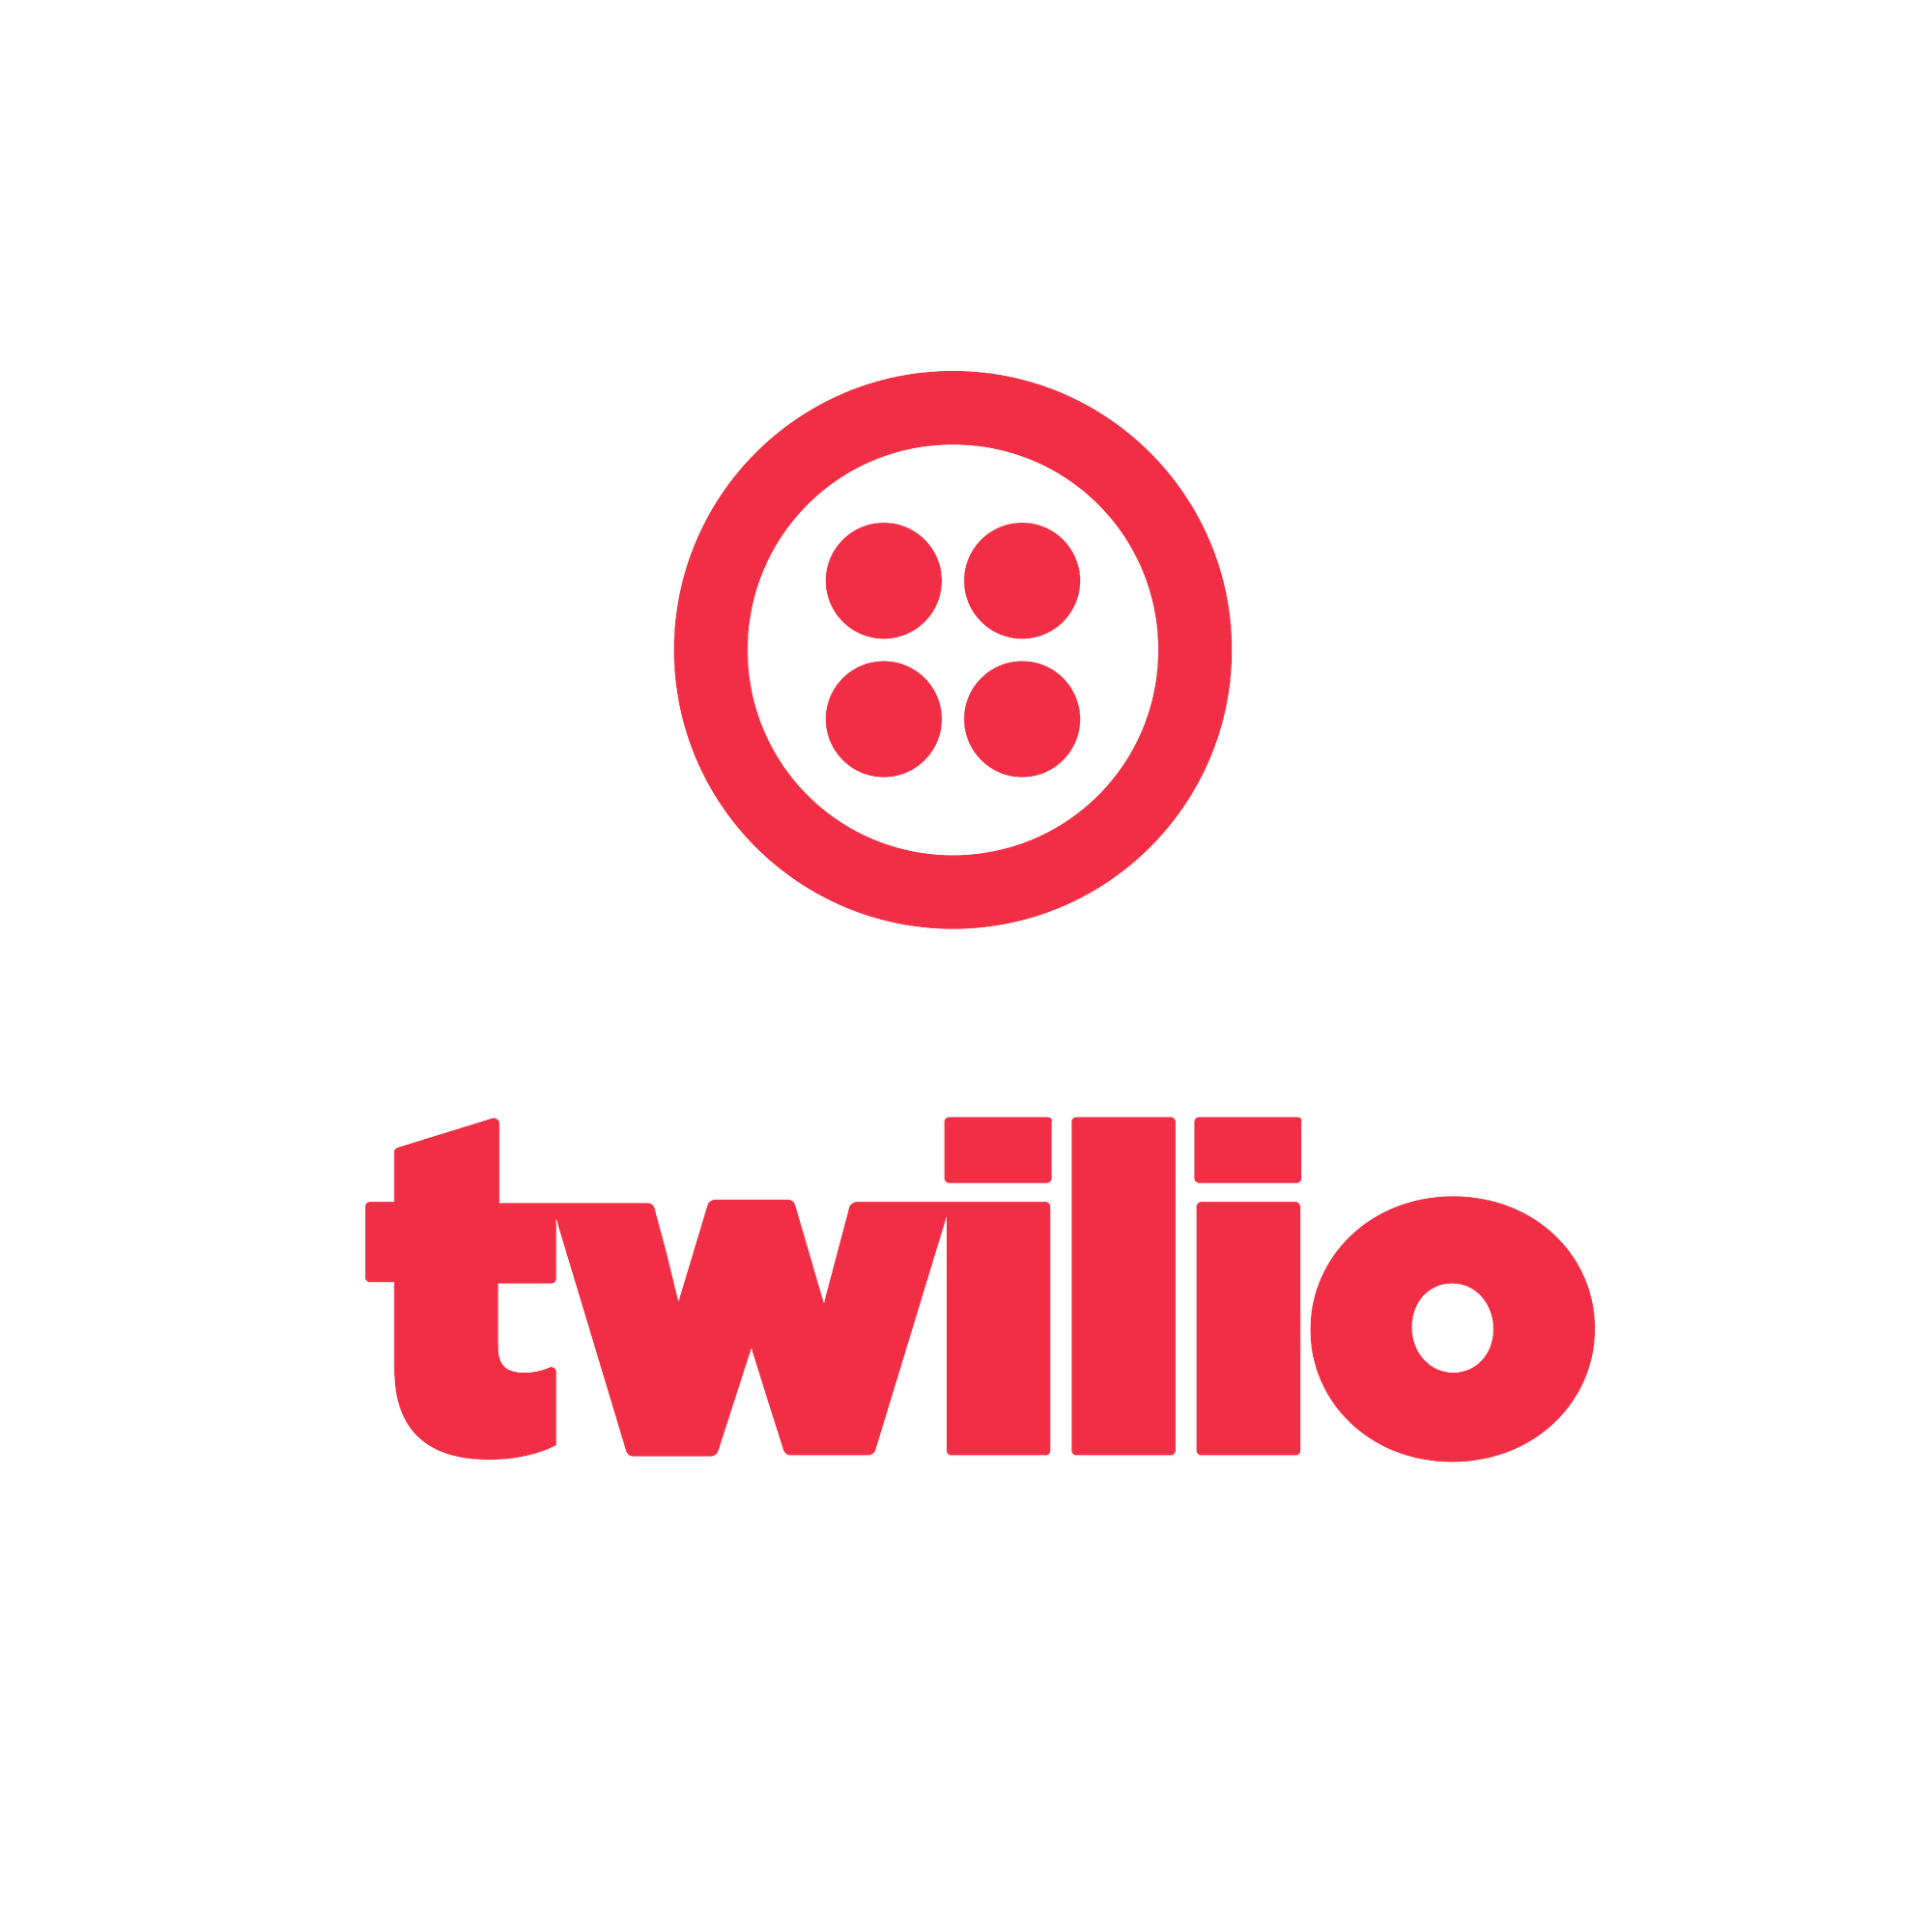 Twilio logo software development